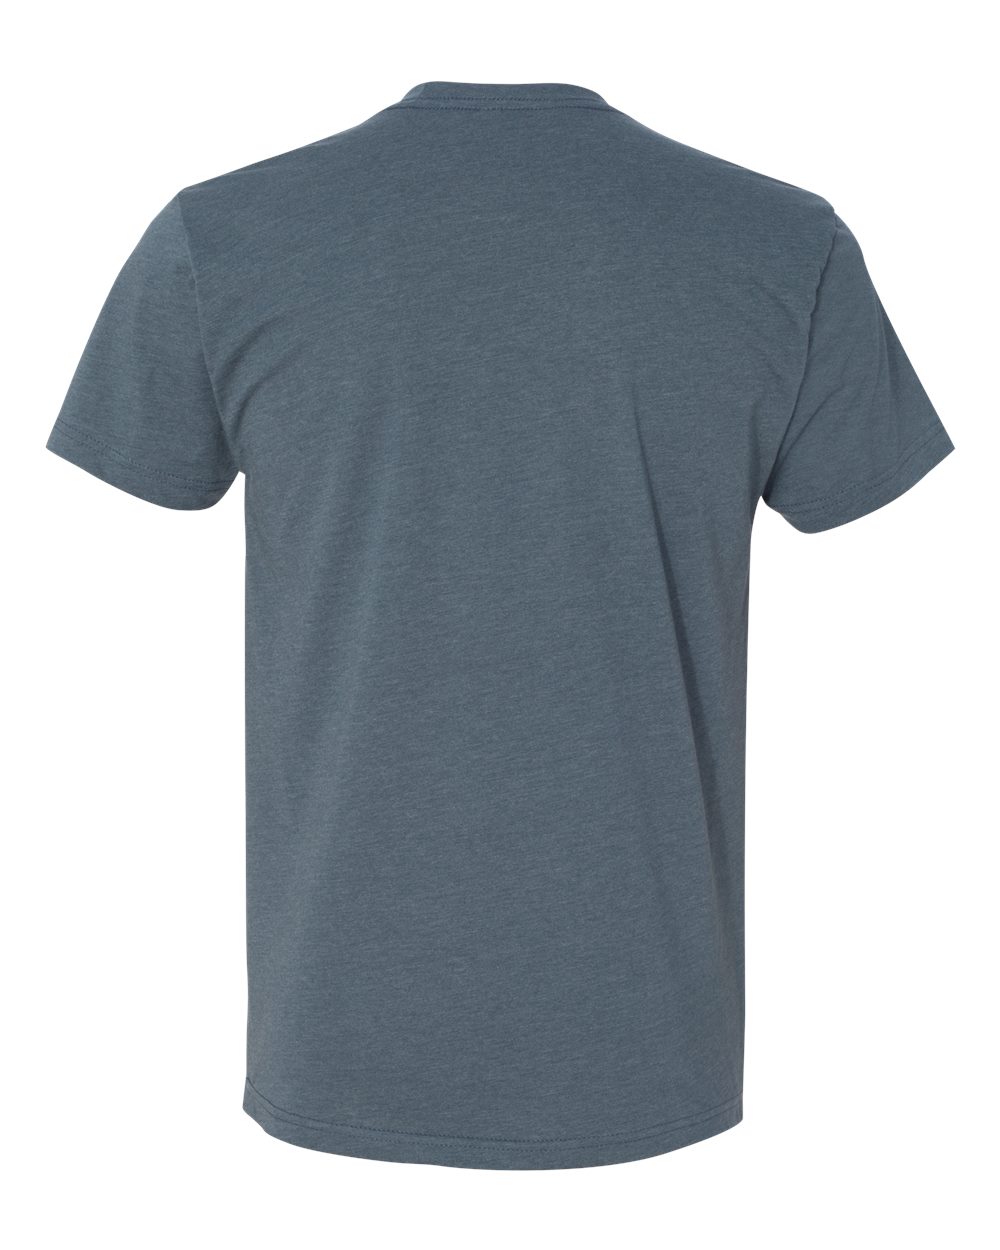 Next Level Mens Plain Blank Premium Fitted CVC Crewneck T Shirts 6210 ...